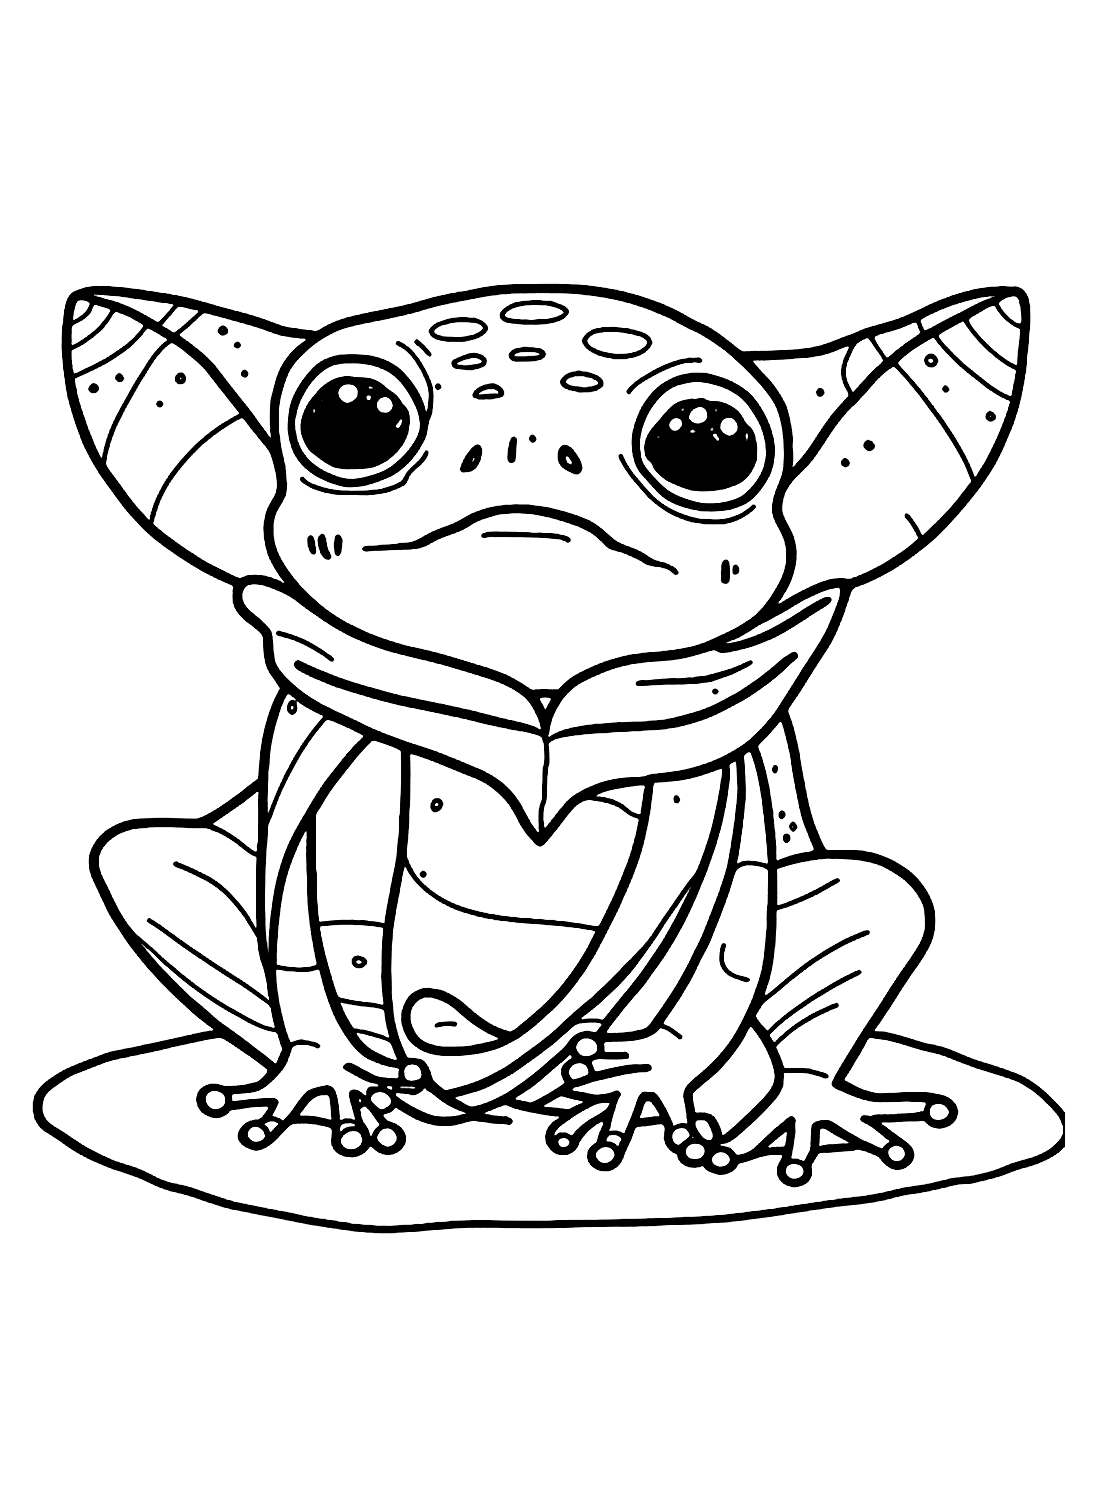 Immagine della rana Baby Yoda